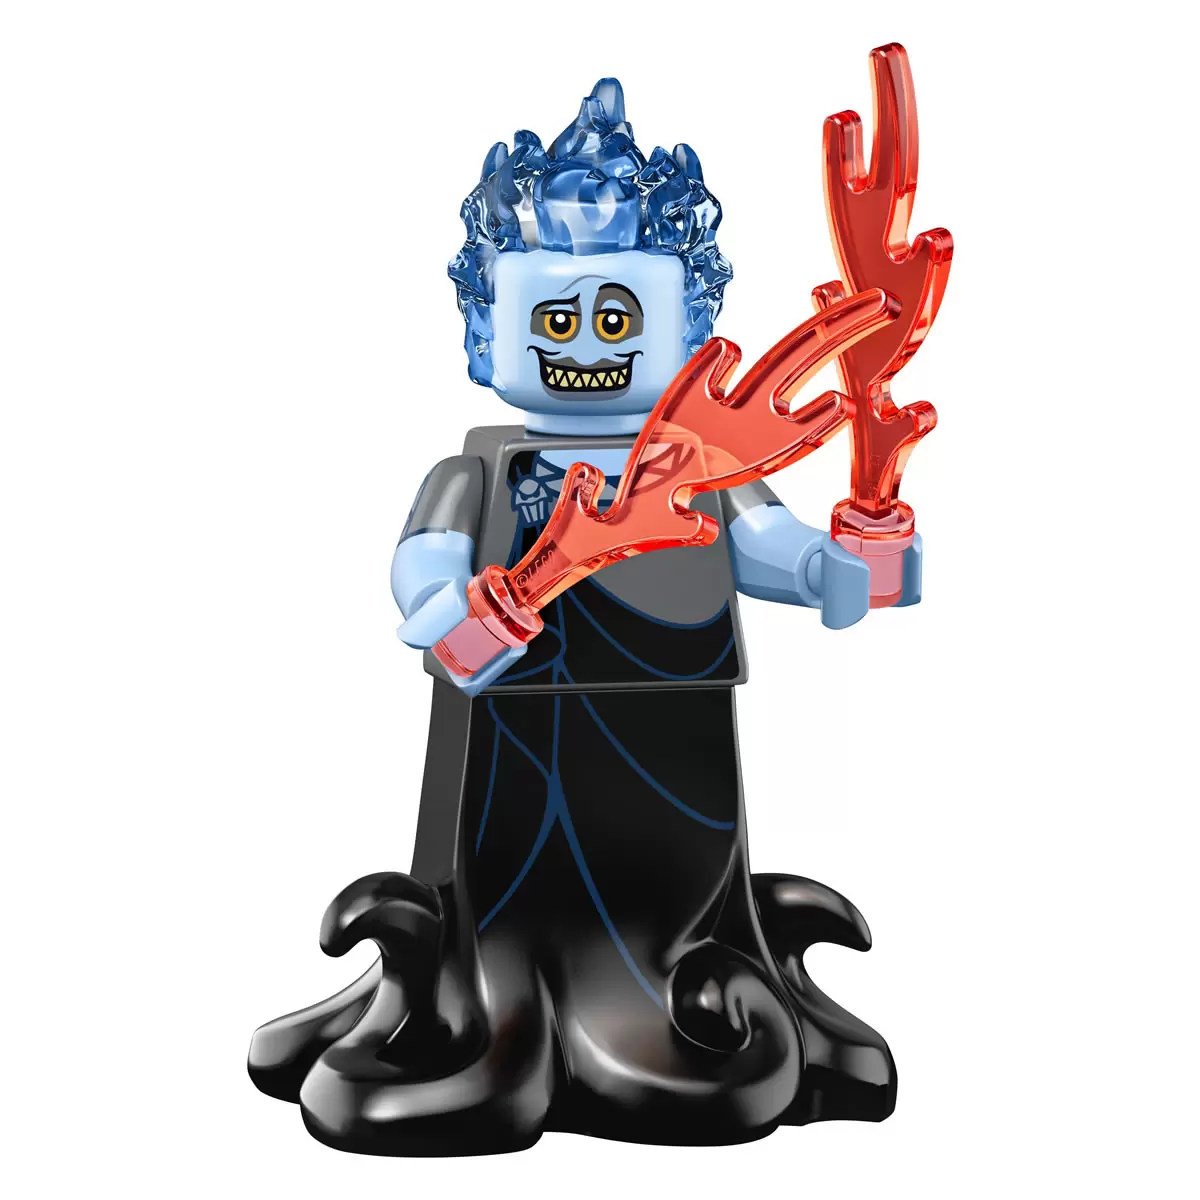 LEGO Minifigures Disney Series 2 - Hades